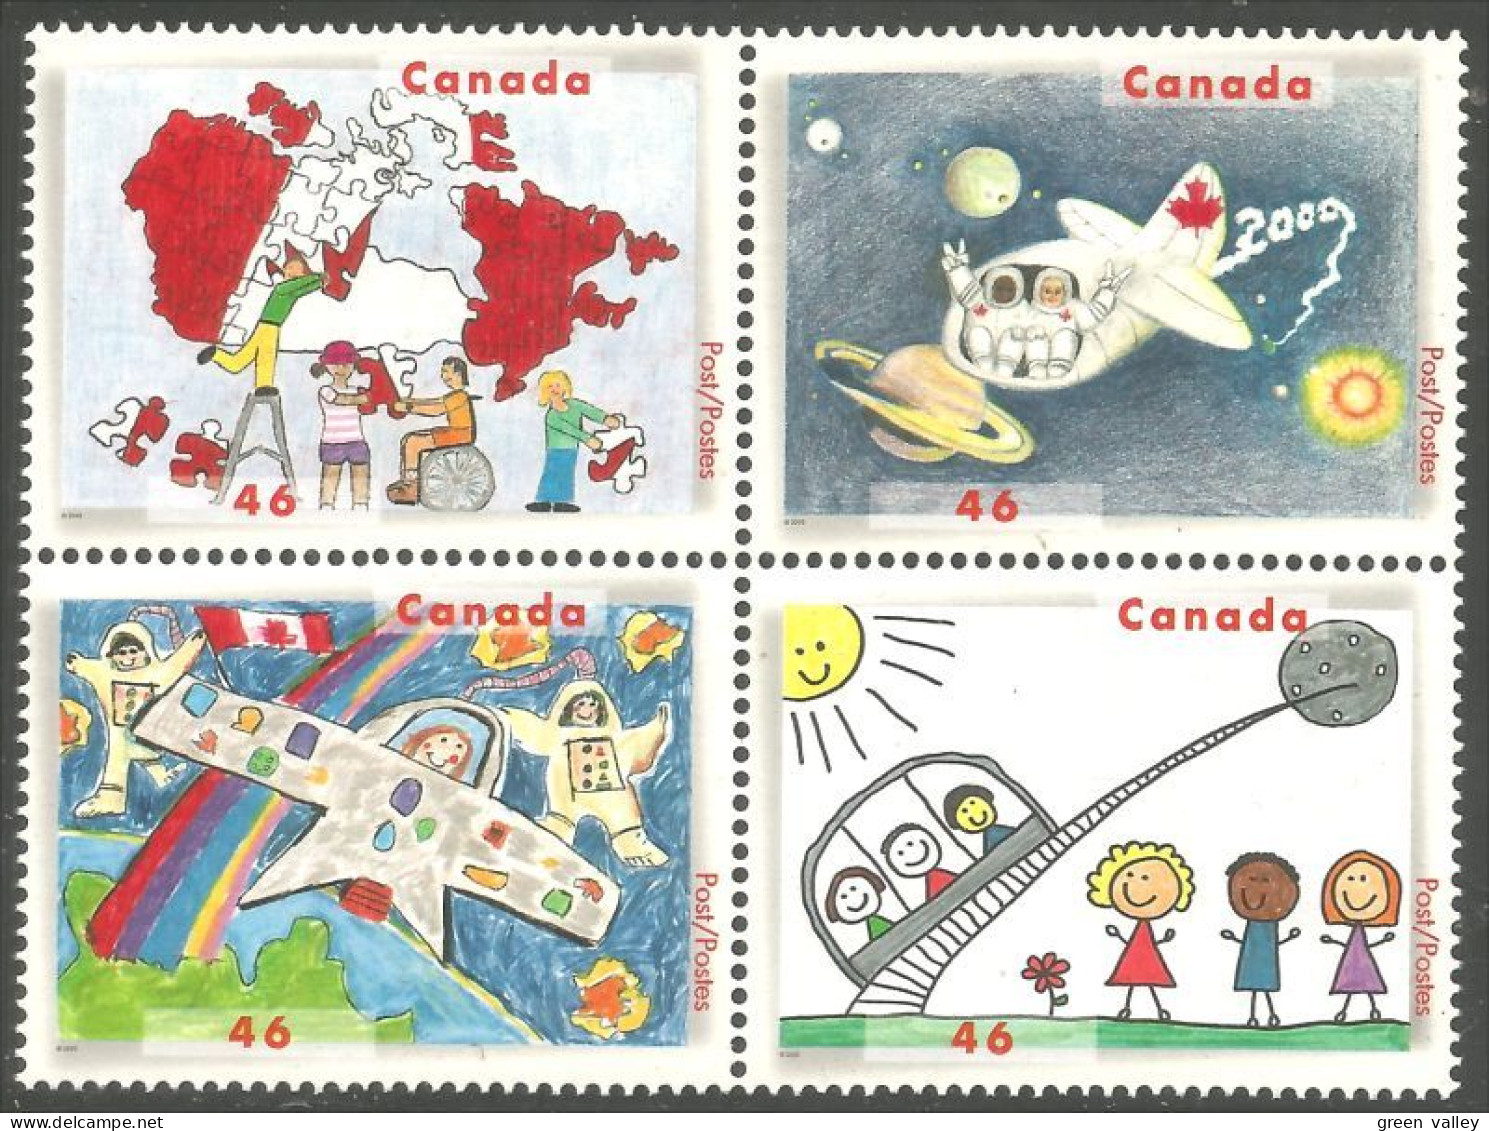 Canada Avion Airplane Dessin Enfants Children Drawings MNH ** Neuf SC (C18-62a) - Nuovi